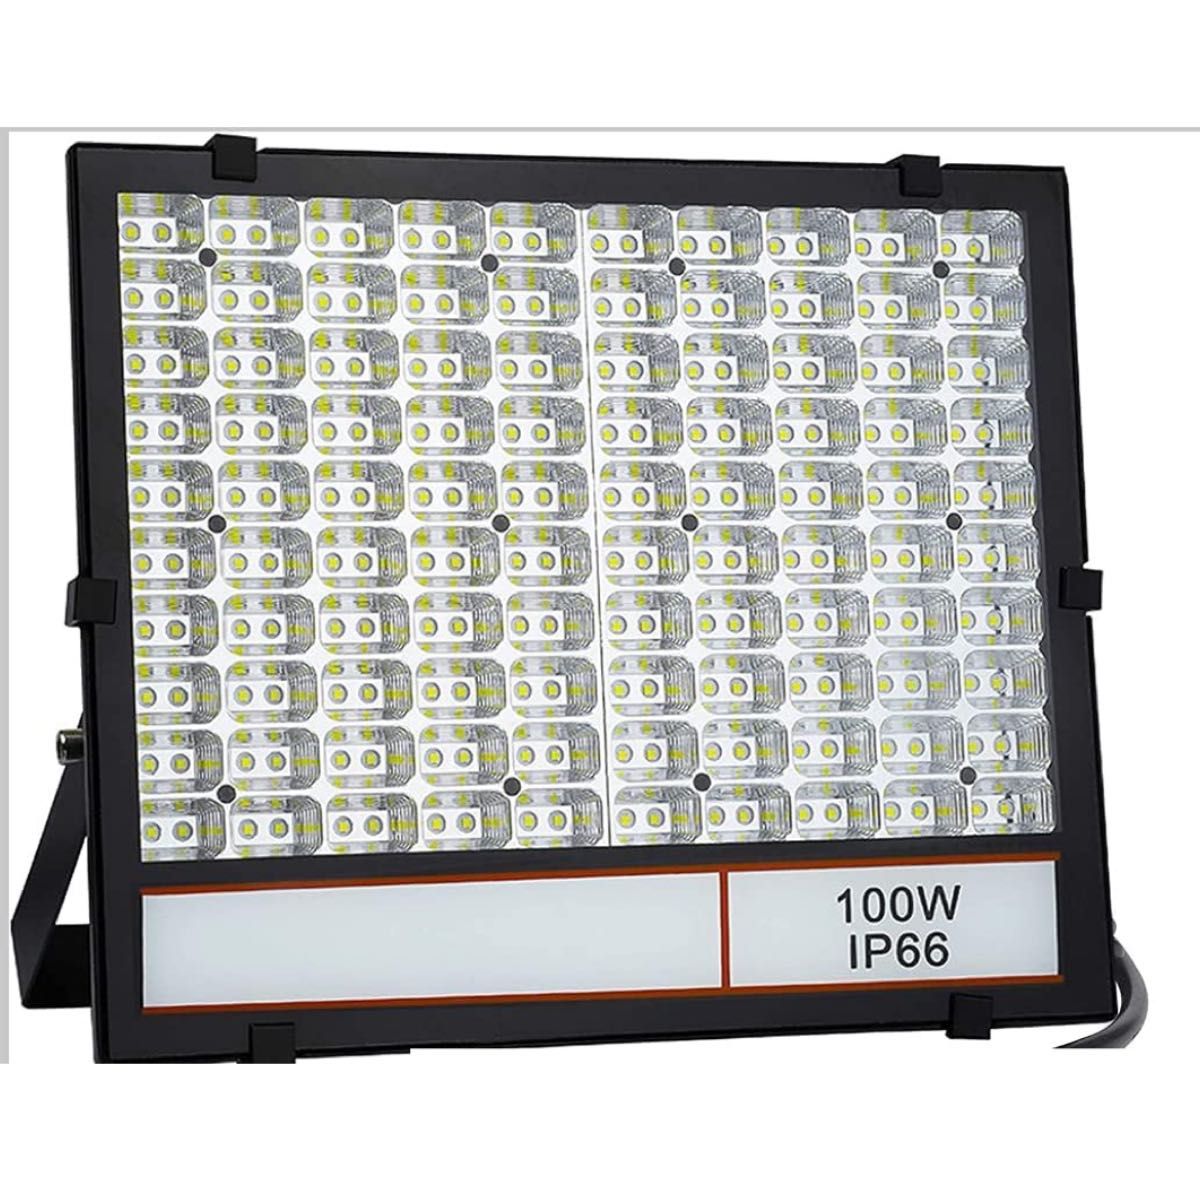 超薄型・超高輝度 LED投光器 100W 10000LM 広い範囲照射可能 放熱性高い 耐久型 防塵防水レベルIP66同等以上　